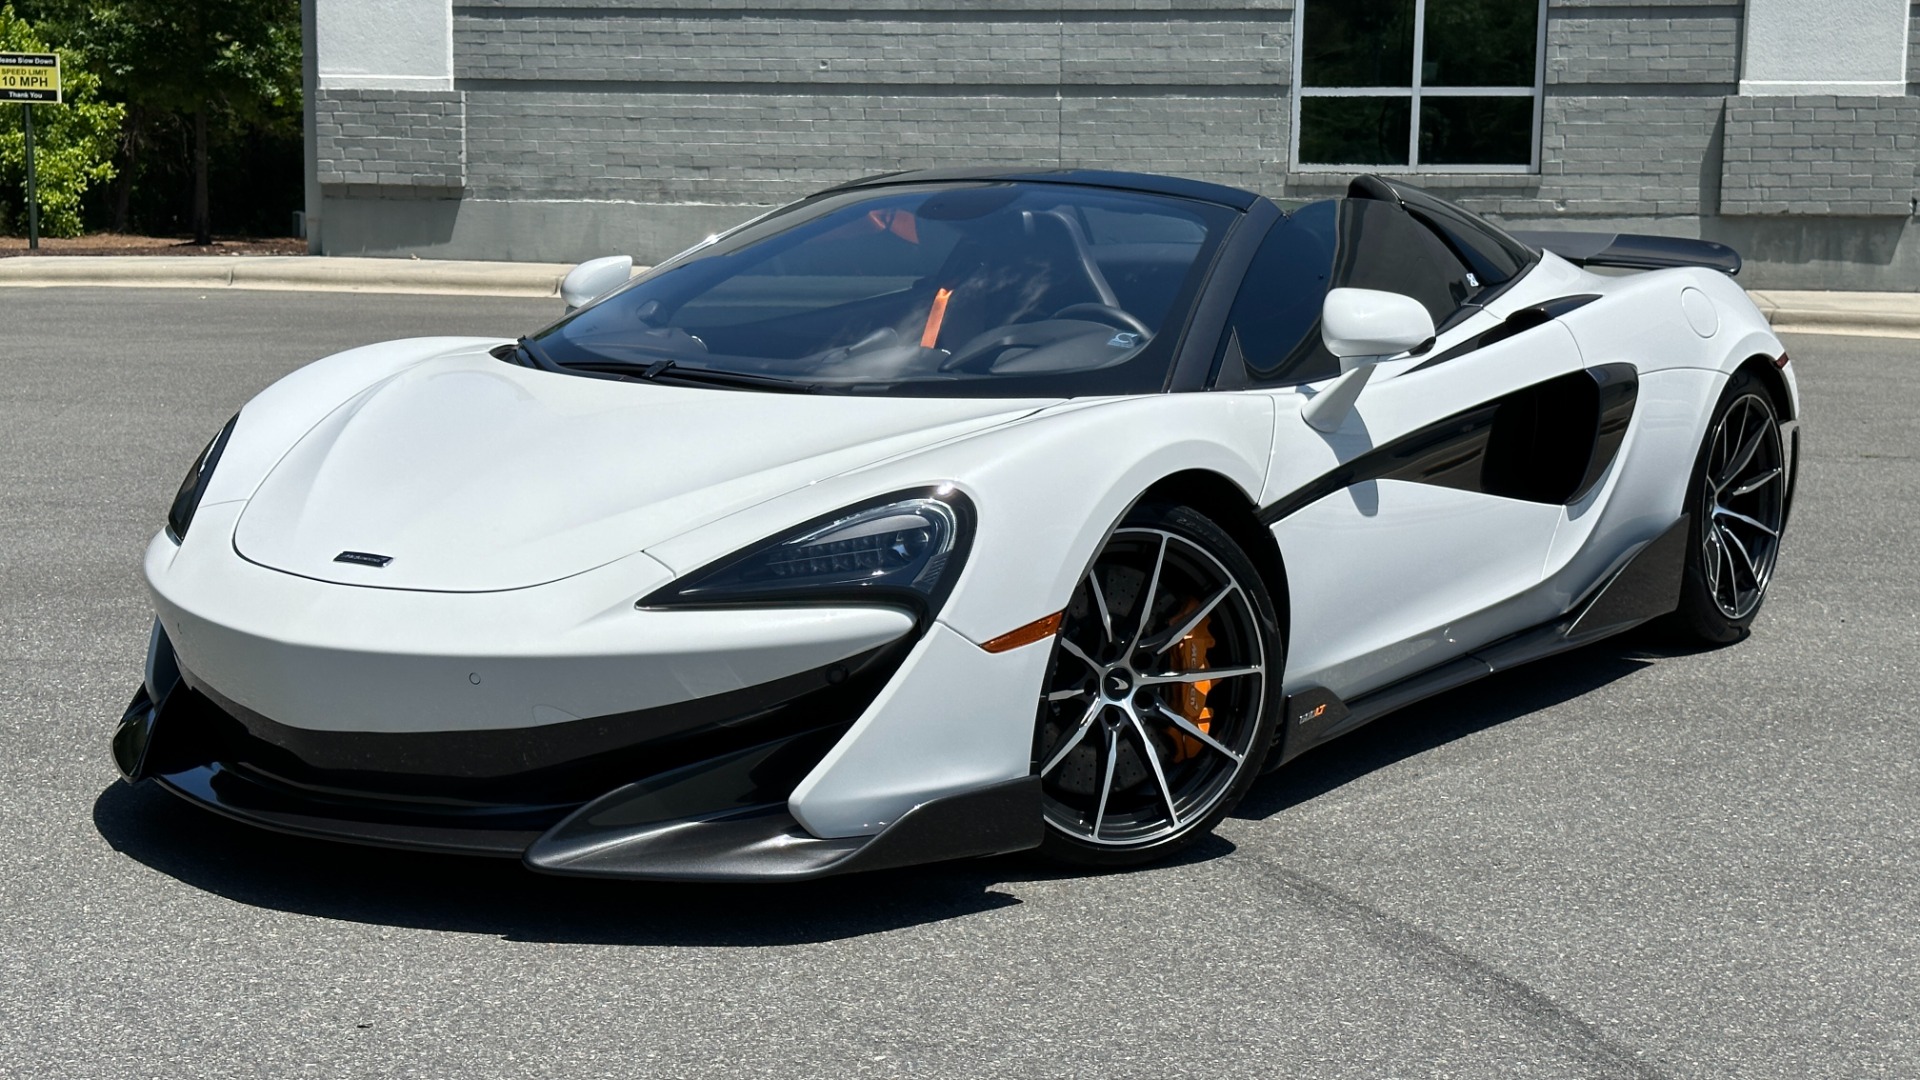 Used 2020 McLaren 600LT SPIDER / FRONT PPF / LEATHER INT / MSO BELTS / CARBON FIBER INT for sale $295,000 at Formula Imports in Charlotte NC 28227 1